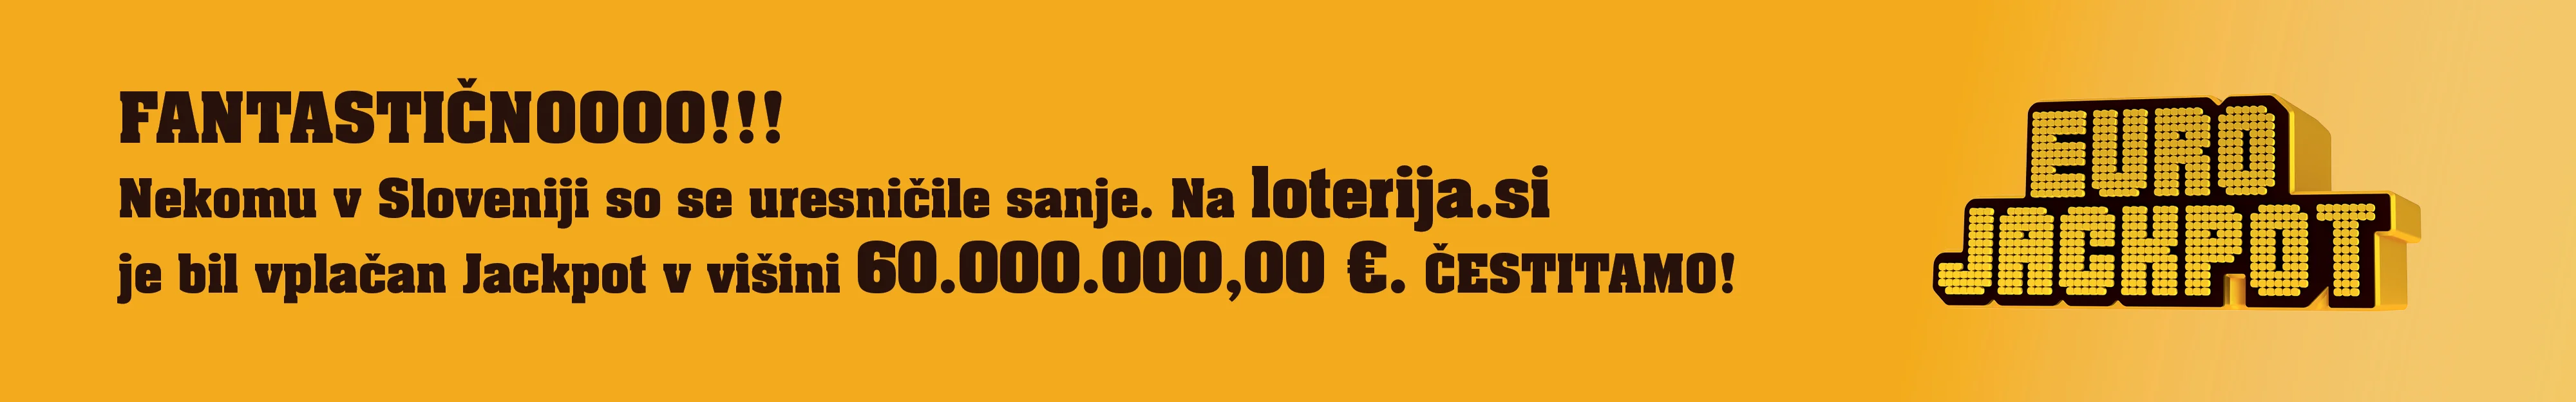 Fantastičnoooooo!! Nekomu v SLoveniji so se uresničile sanje. Na loterija.si je bil vplačan Jackpot v višini 60.000.000,00 €. Čestitamo!